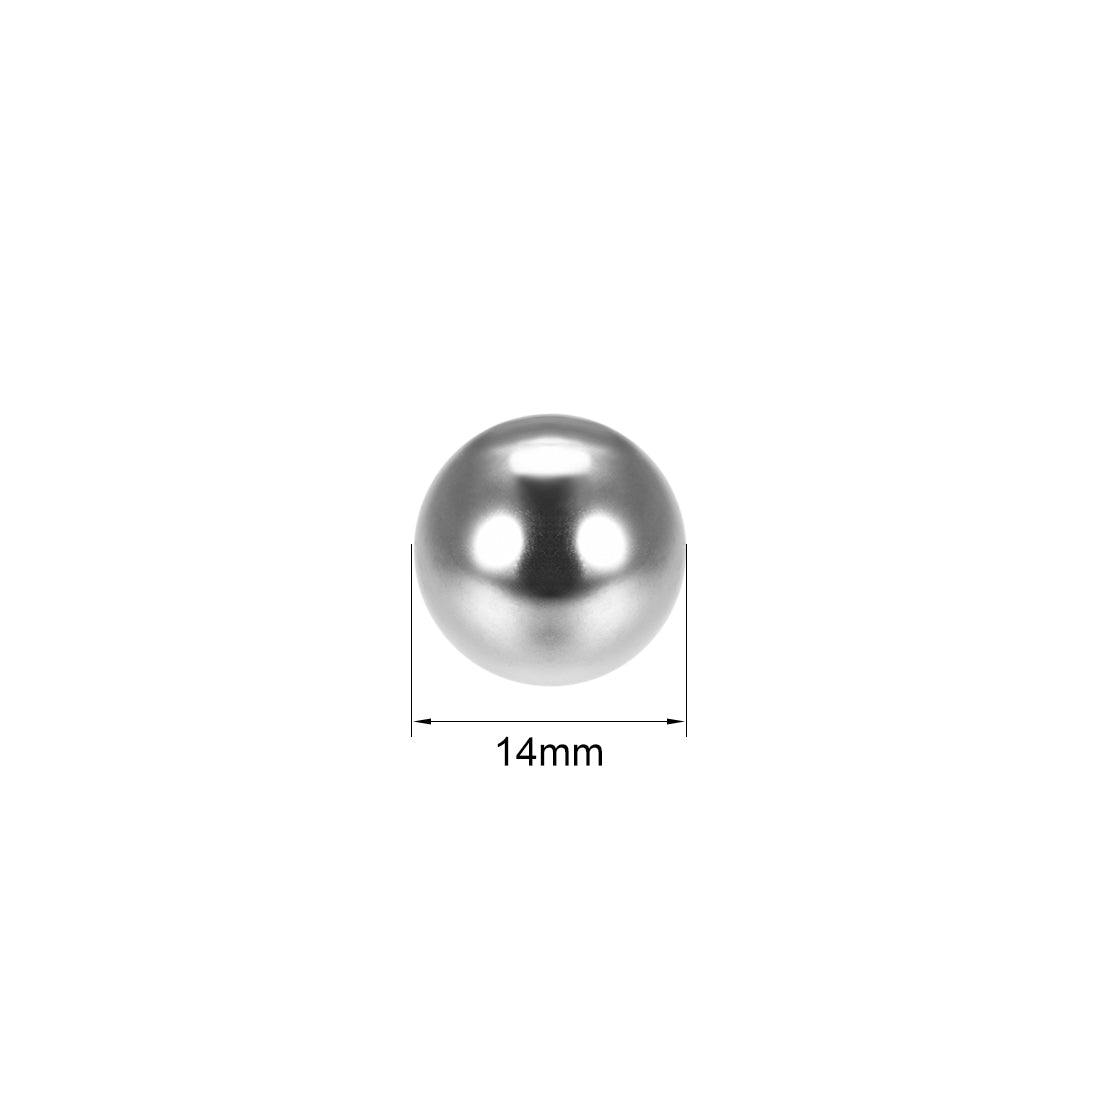 uxcell Uxcell 12mm Precision Chrome Steel Bearing Balls G25 10pcs